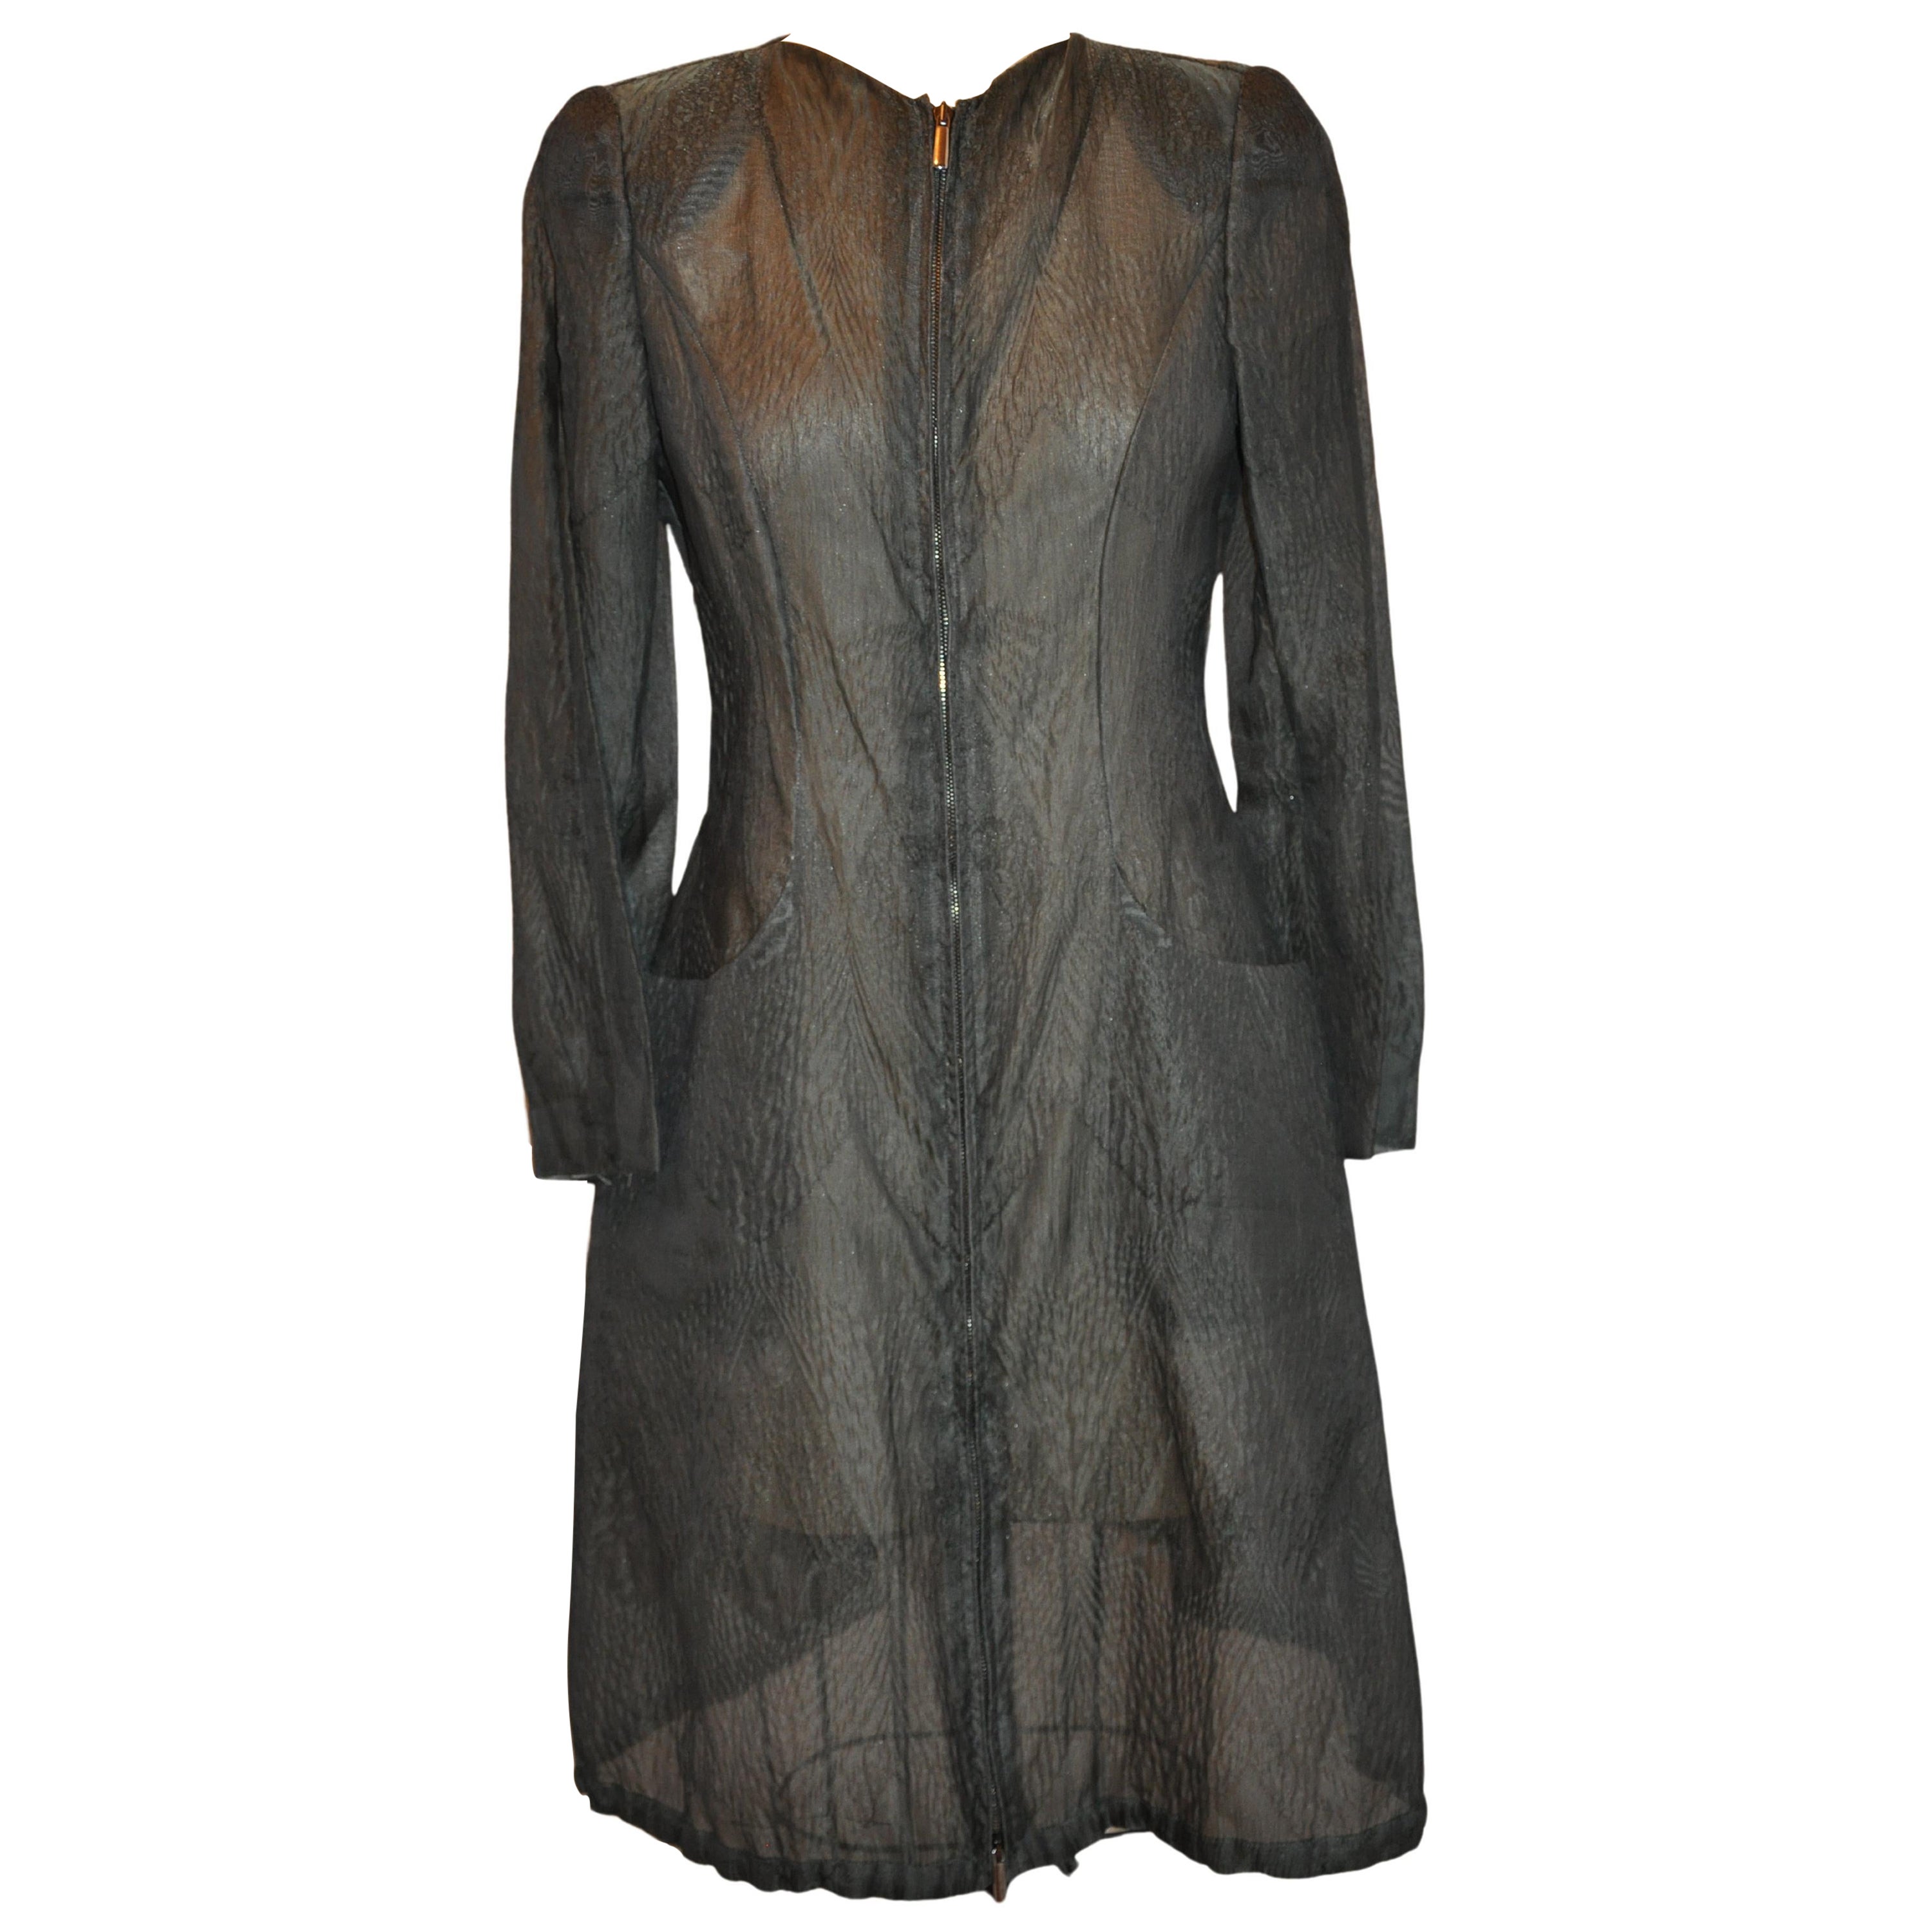 Georgio Armani 'Black Label' Forest-Green Silk Taffeta 2-Way Zippered Dress/Coat